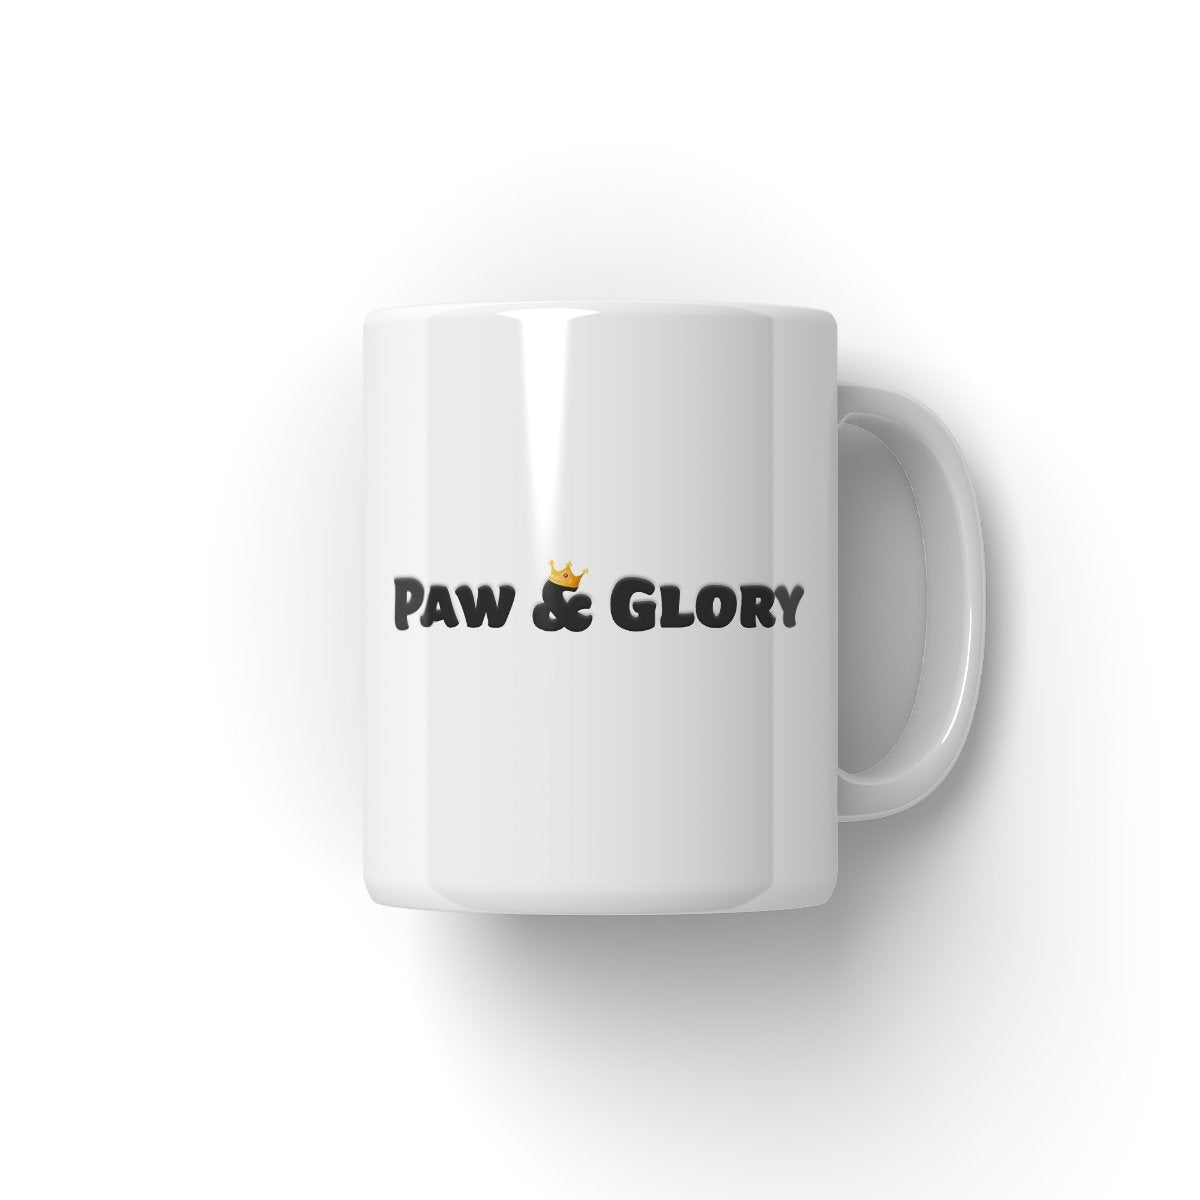 Cartoon: Custom 1 Pet Mug - Paw & Glory - #pet portraits# - #dog portraits# - #pet portraits uk#paw & glory, custom pet portrait Mug,personalized gifts mug, coffee mugs with dogs, mug dog, personalised mugs dog and owner, dog breed mugs